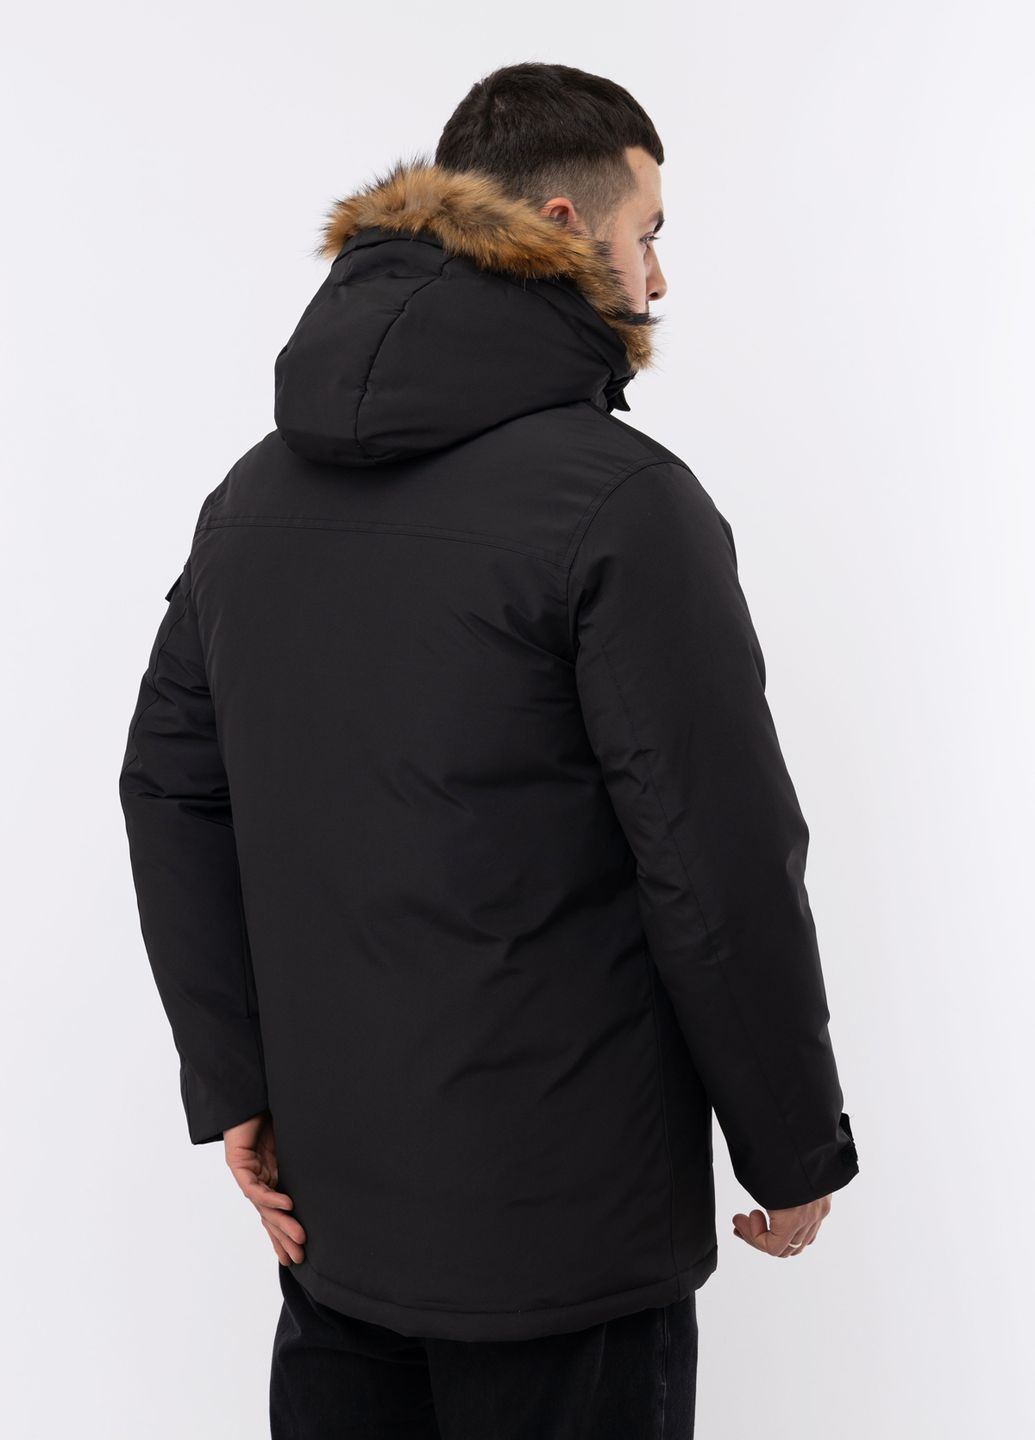 Черная зимняя мужская куртка цвет черный цб-00220372 K.F.G.L.